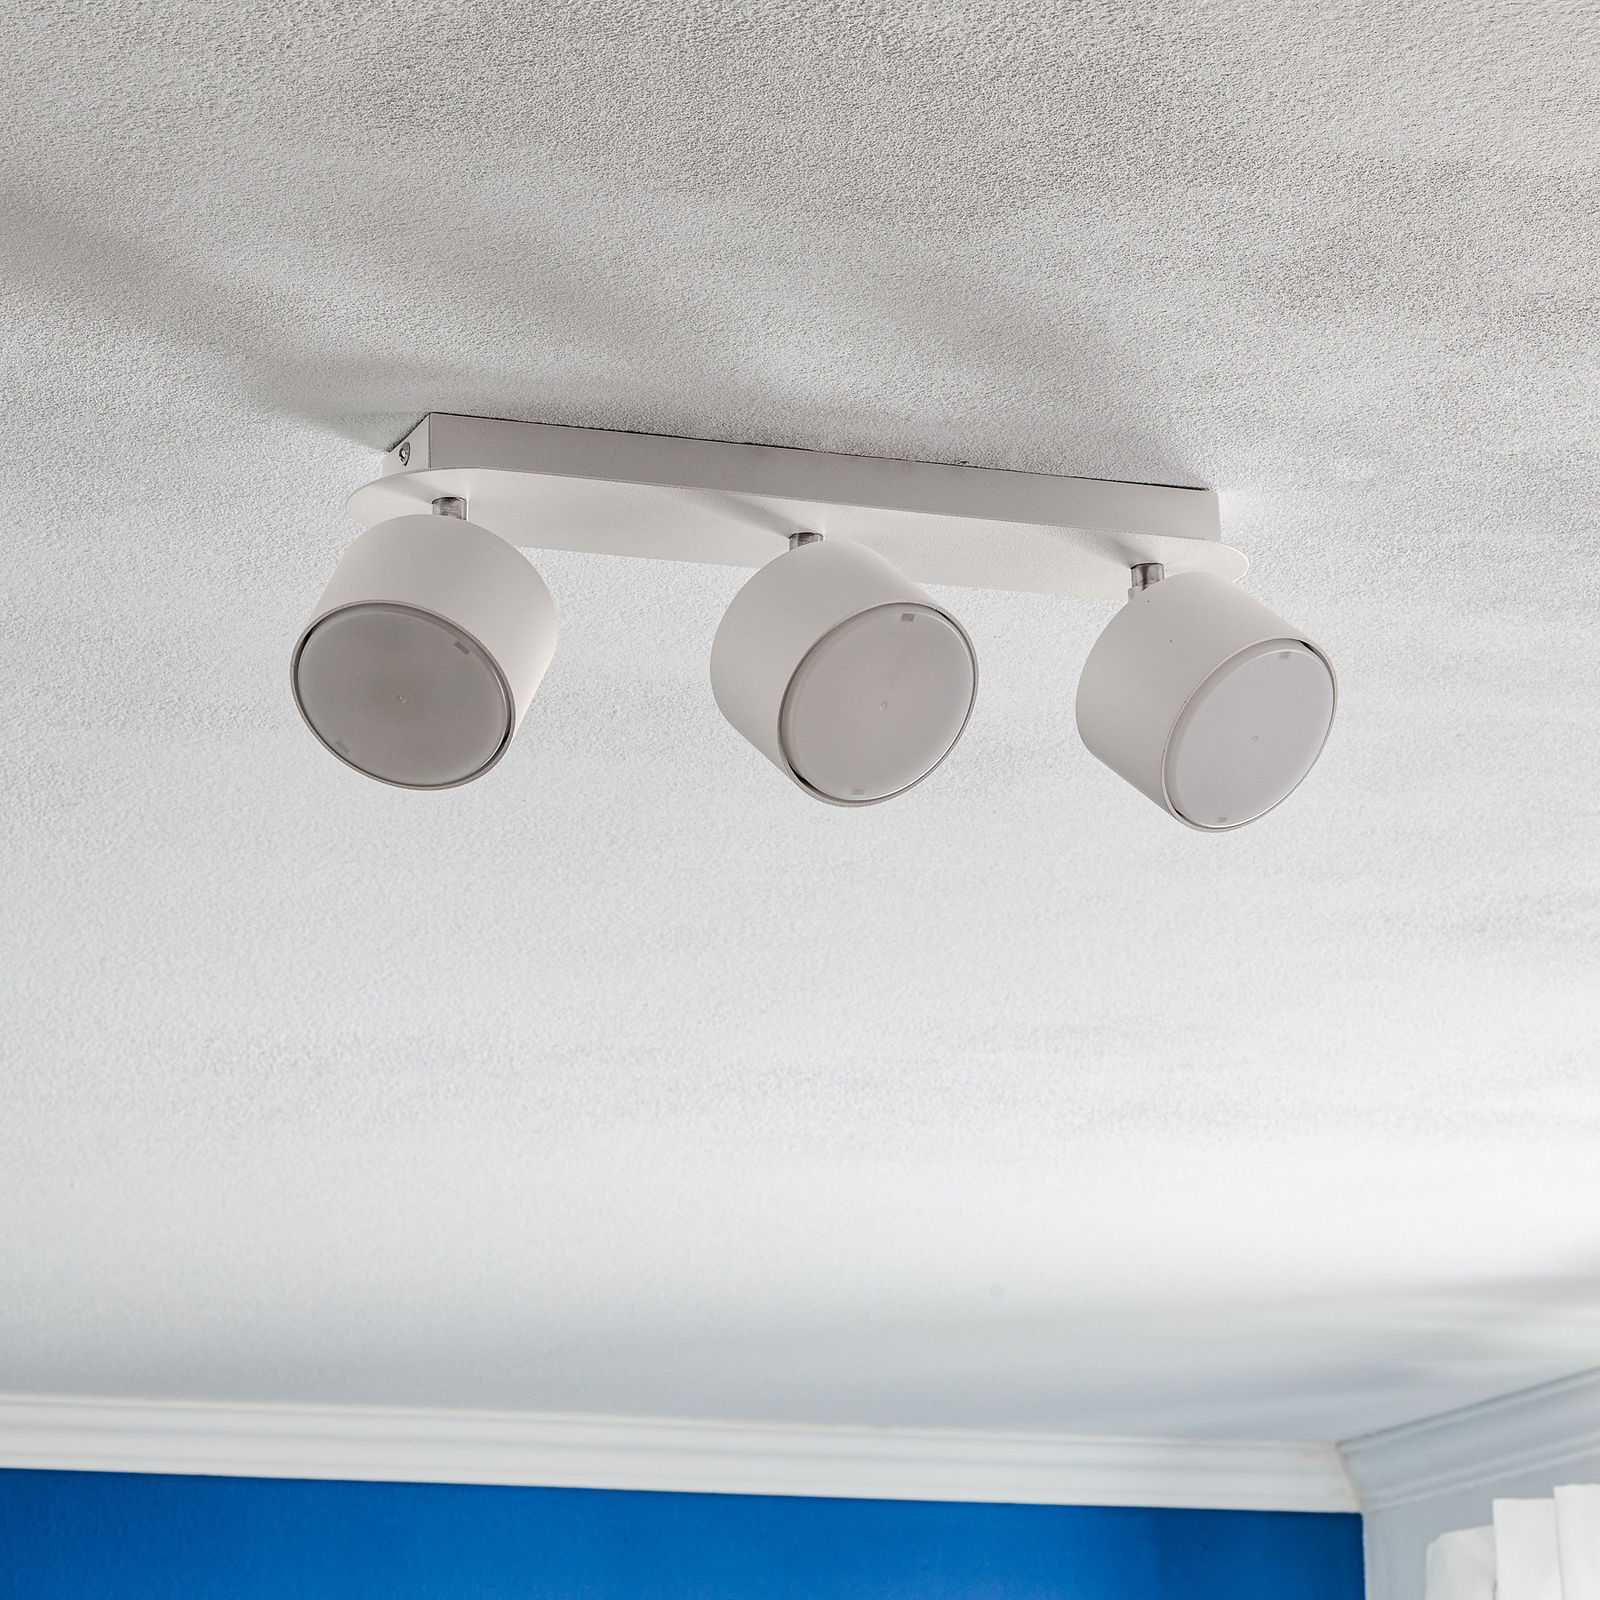 Oblačni bijeli stropni reflektor s tri žarulje